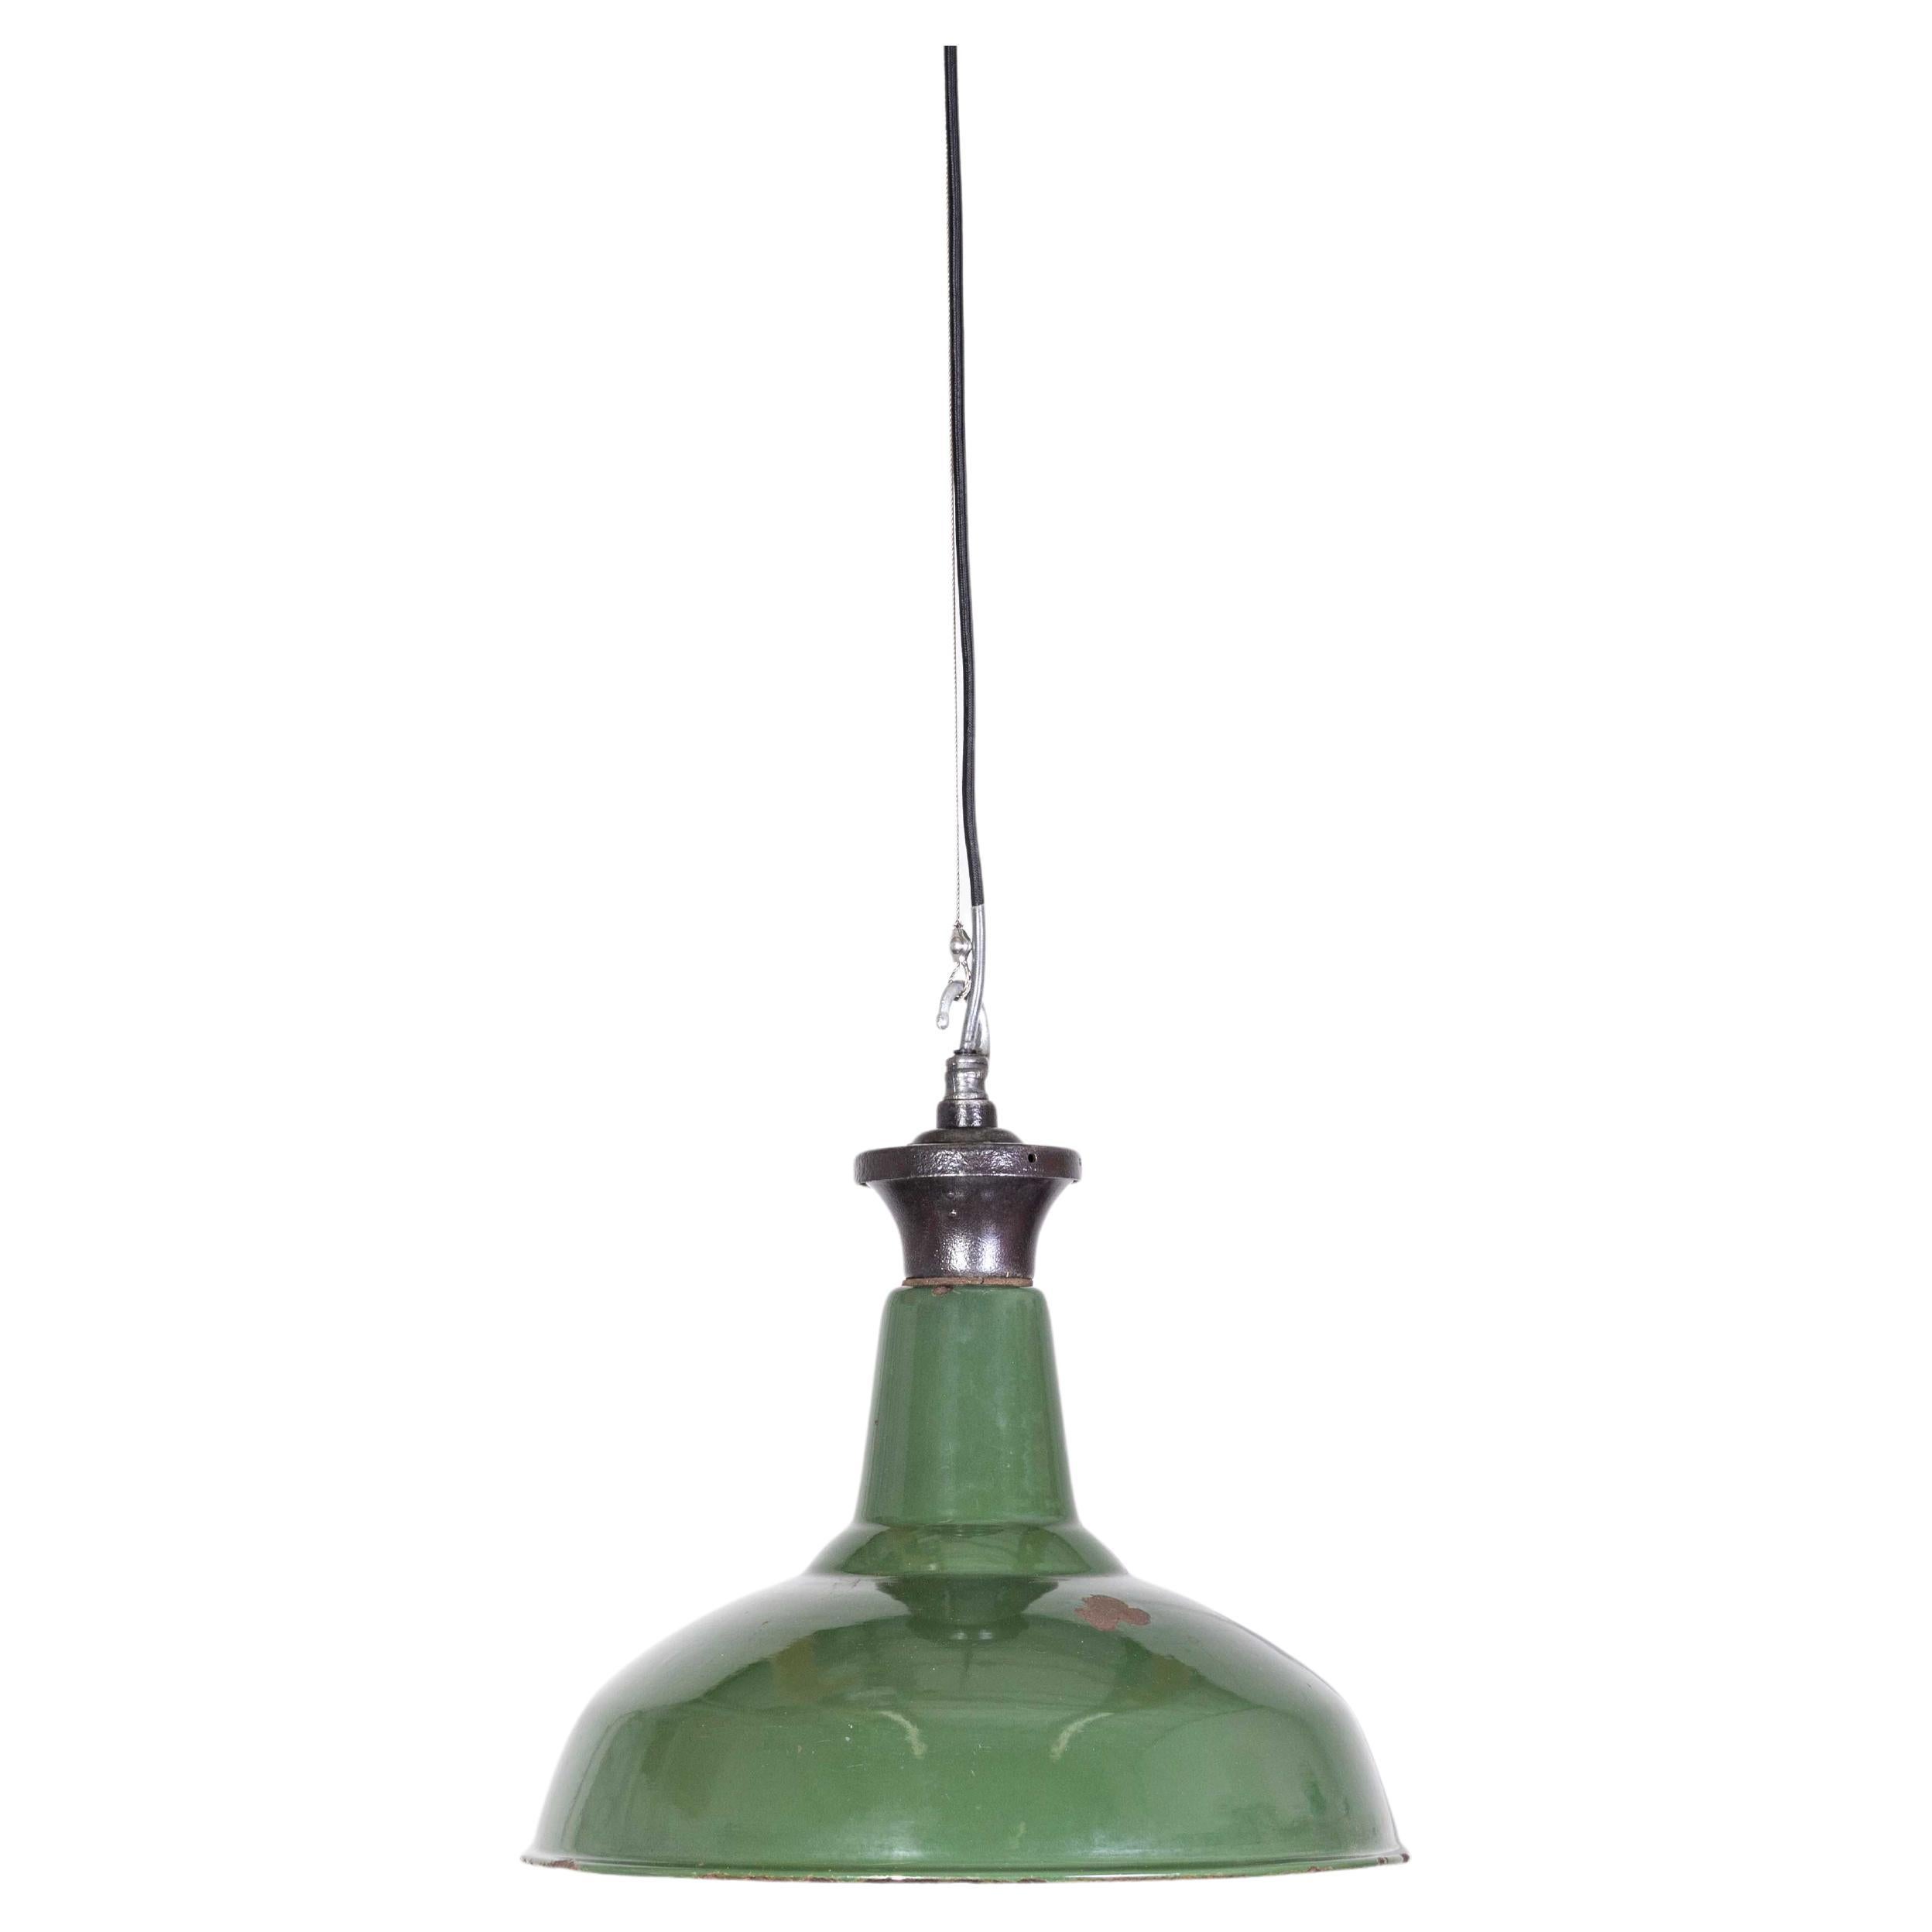 1940's Real Industrial Enamel Green Single Pendant Lamp - 16 Inch For Sale